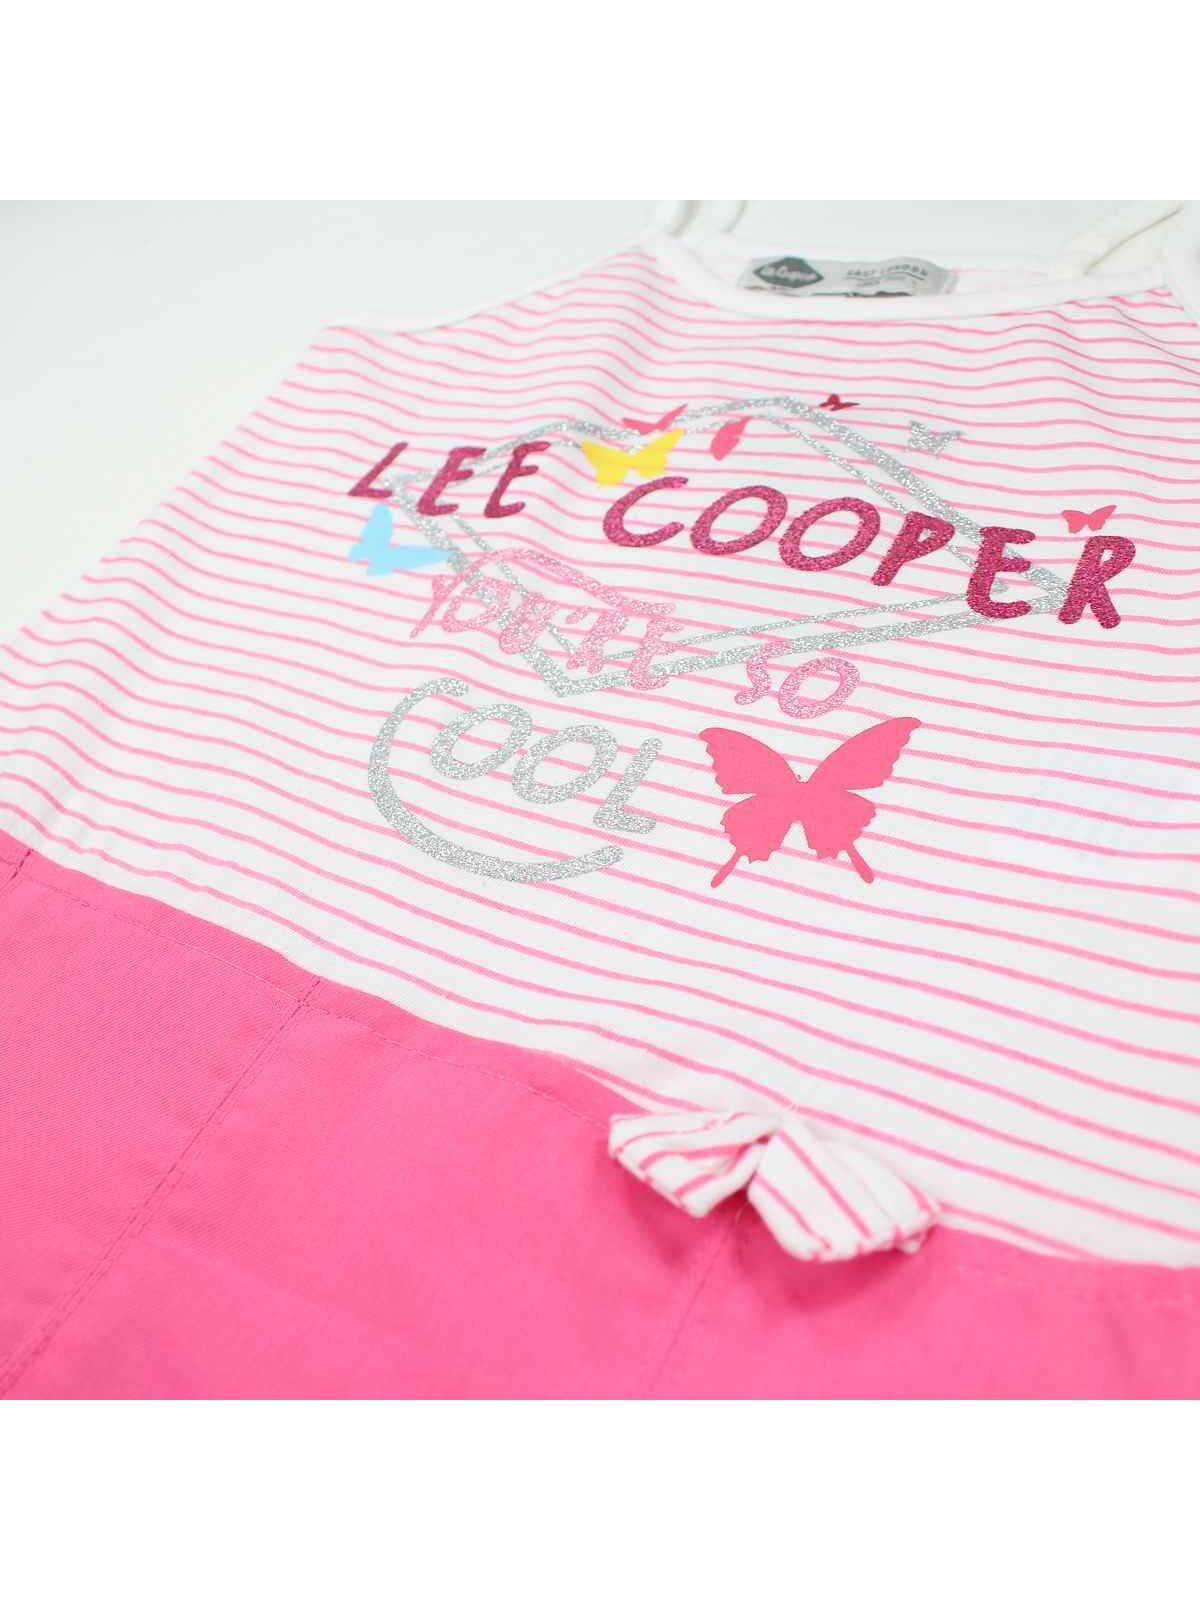 Lee Cooper Kleed